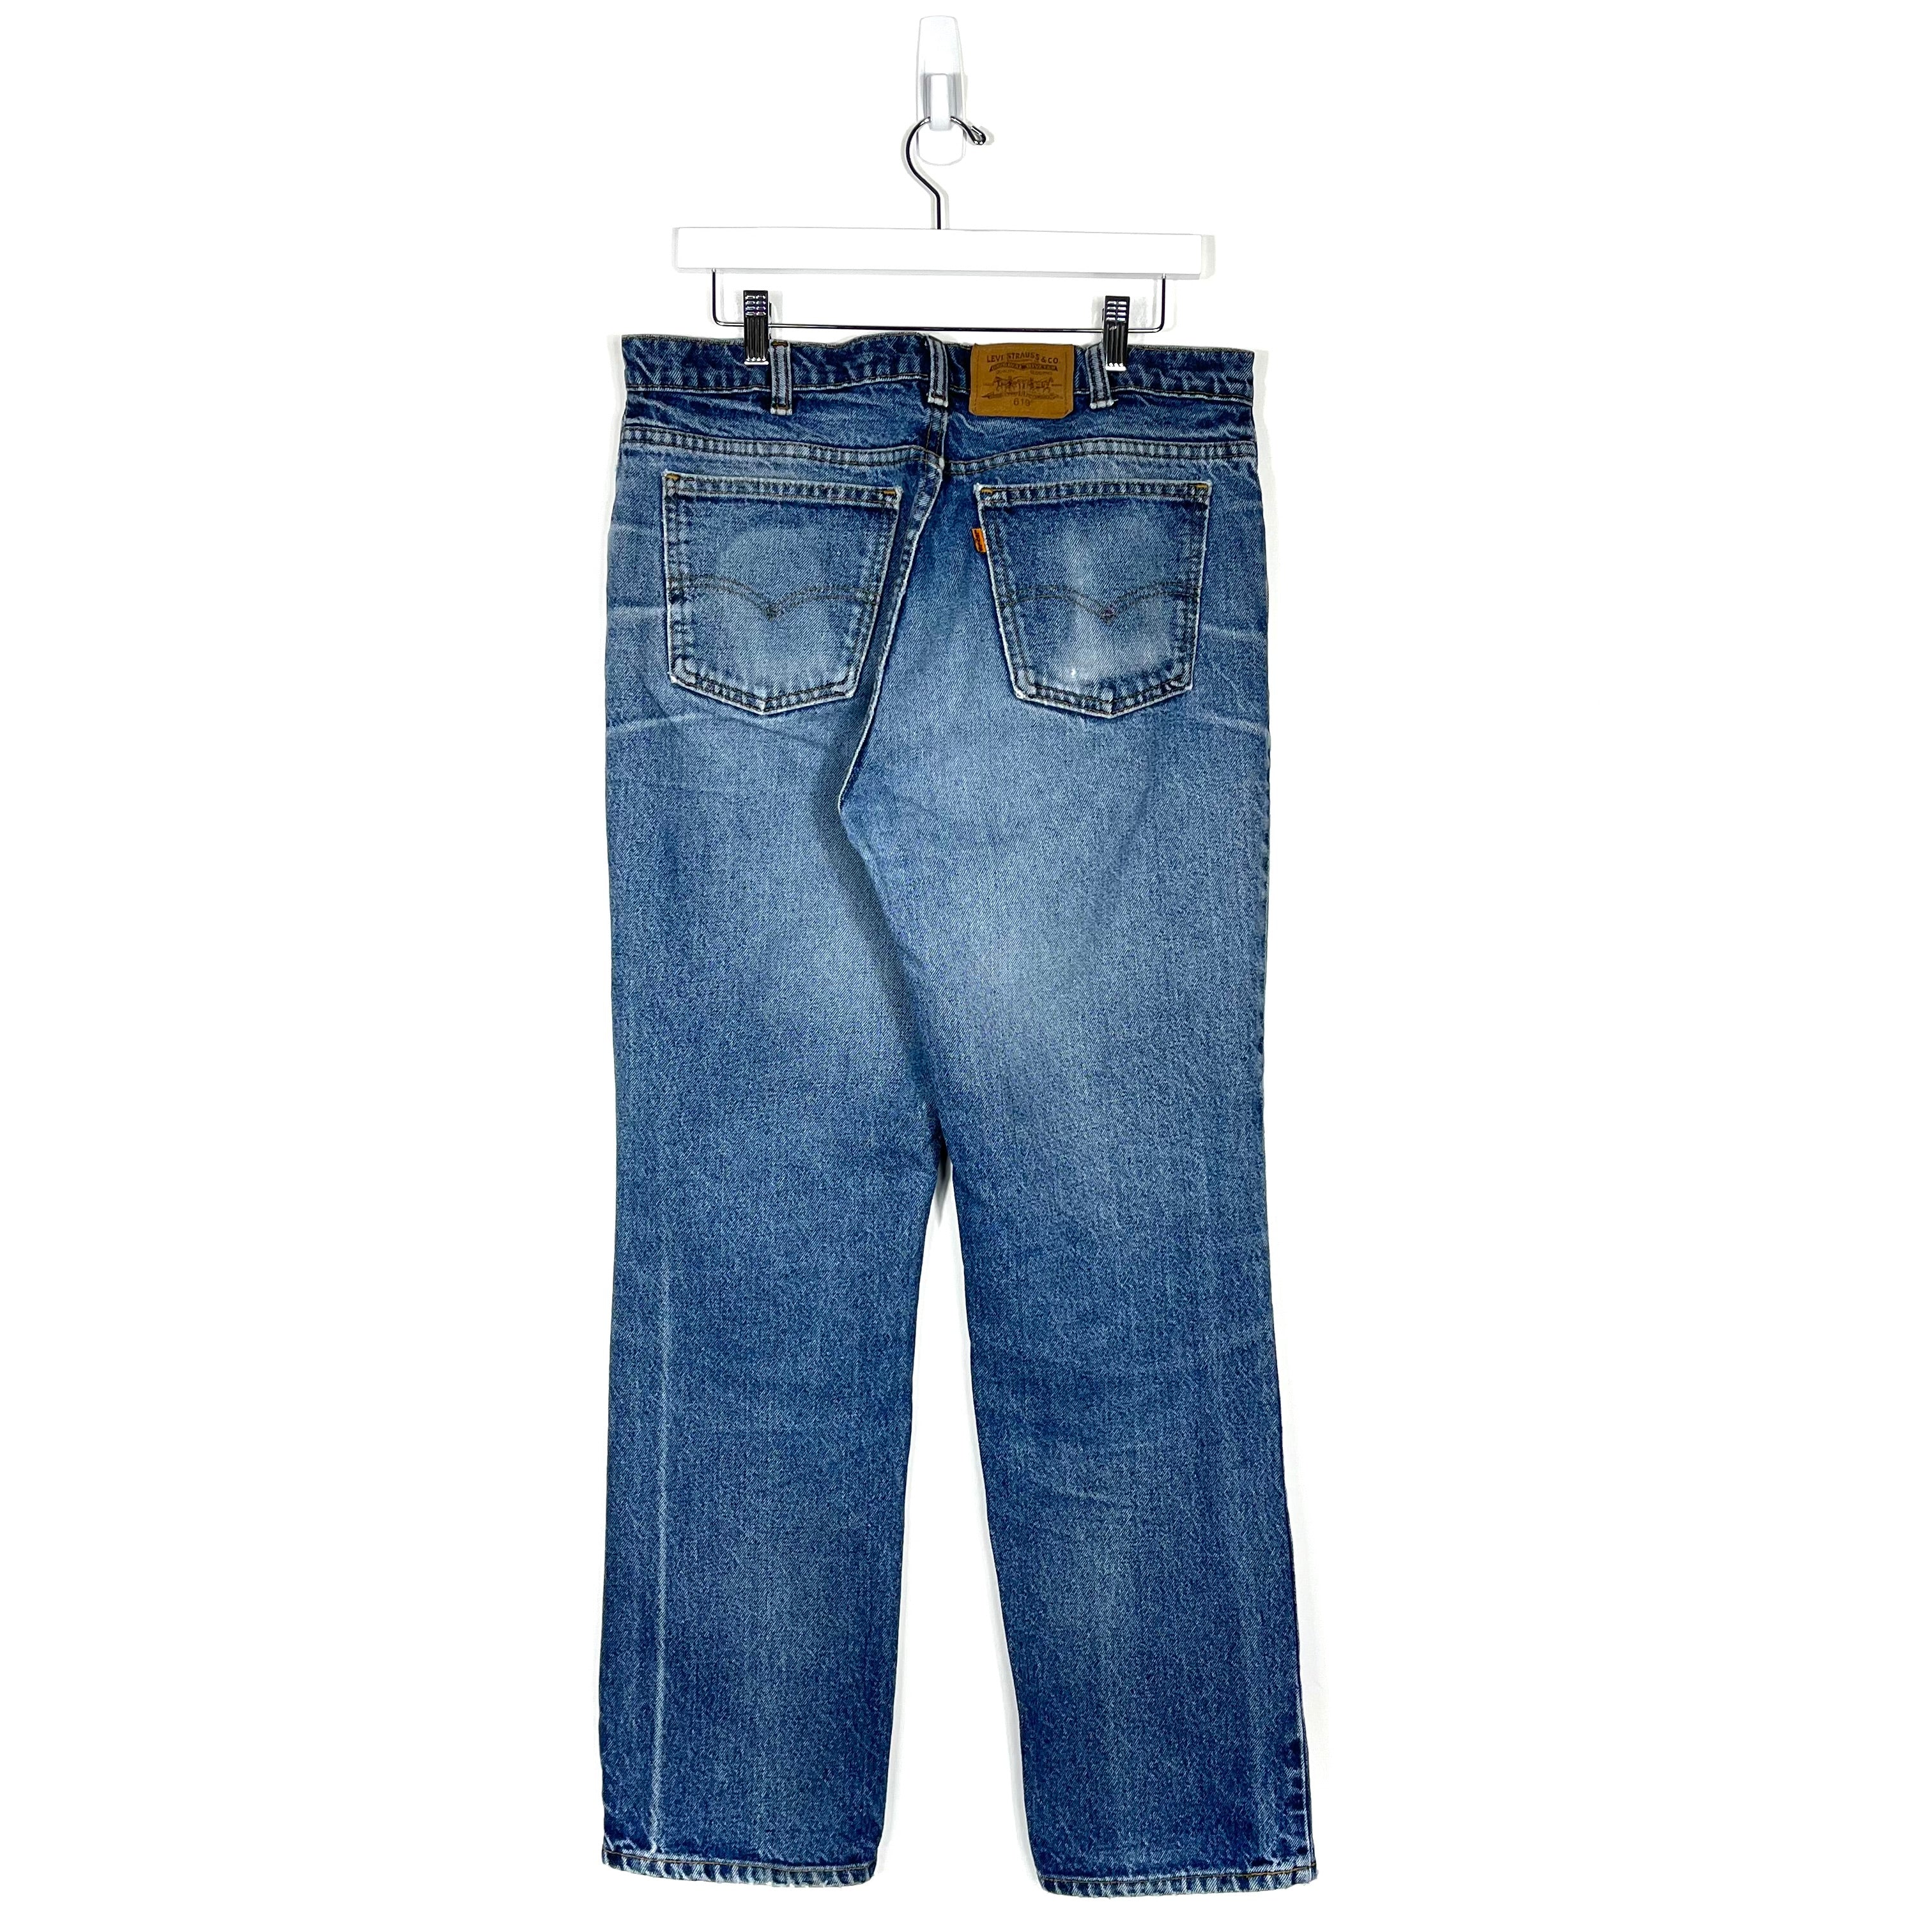 Vintage Levis Orange Tab Jeans - Men's 36/32